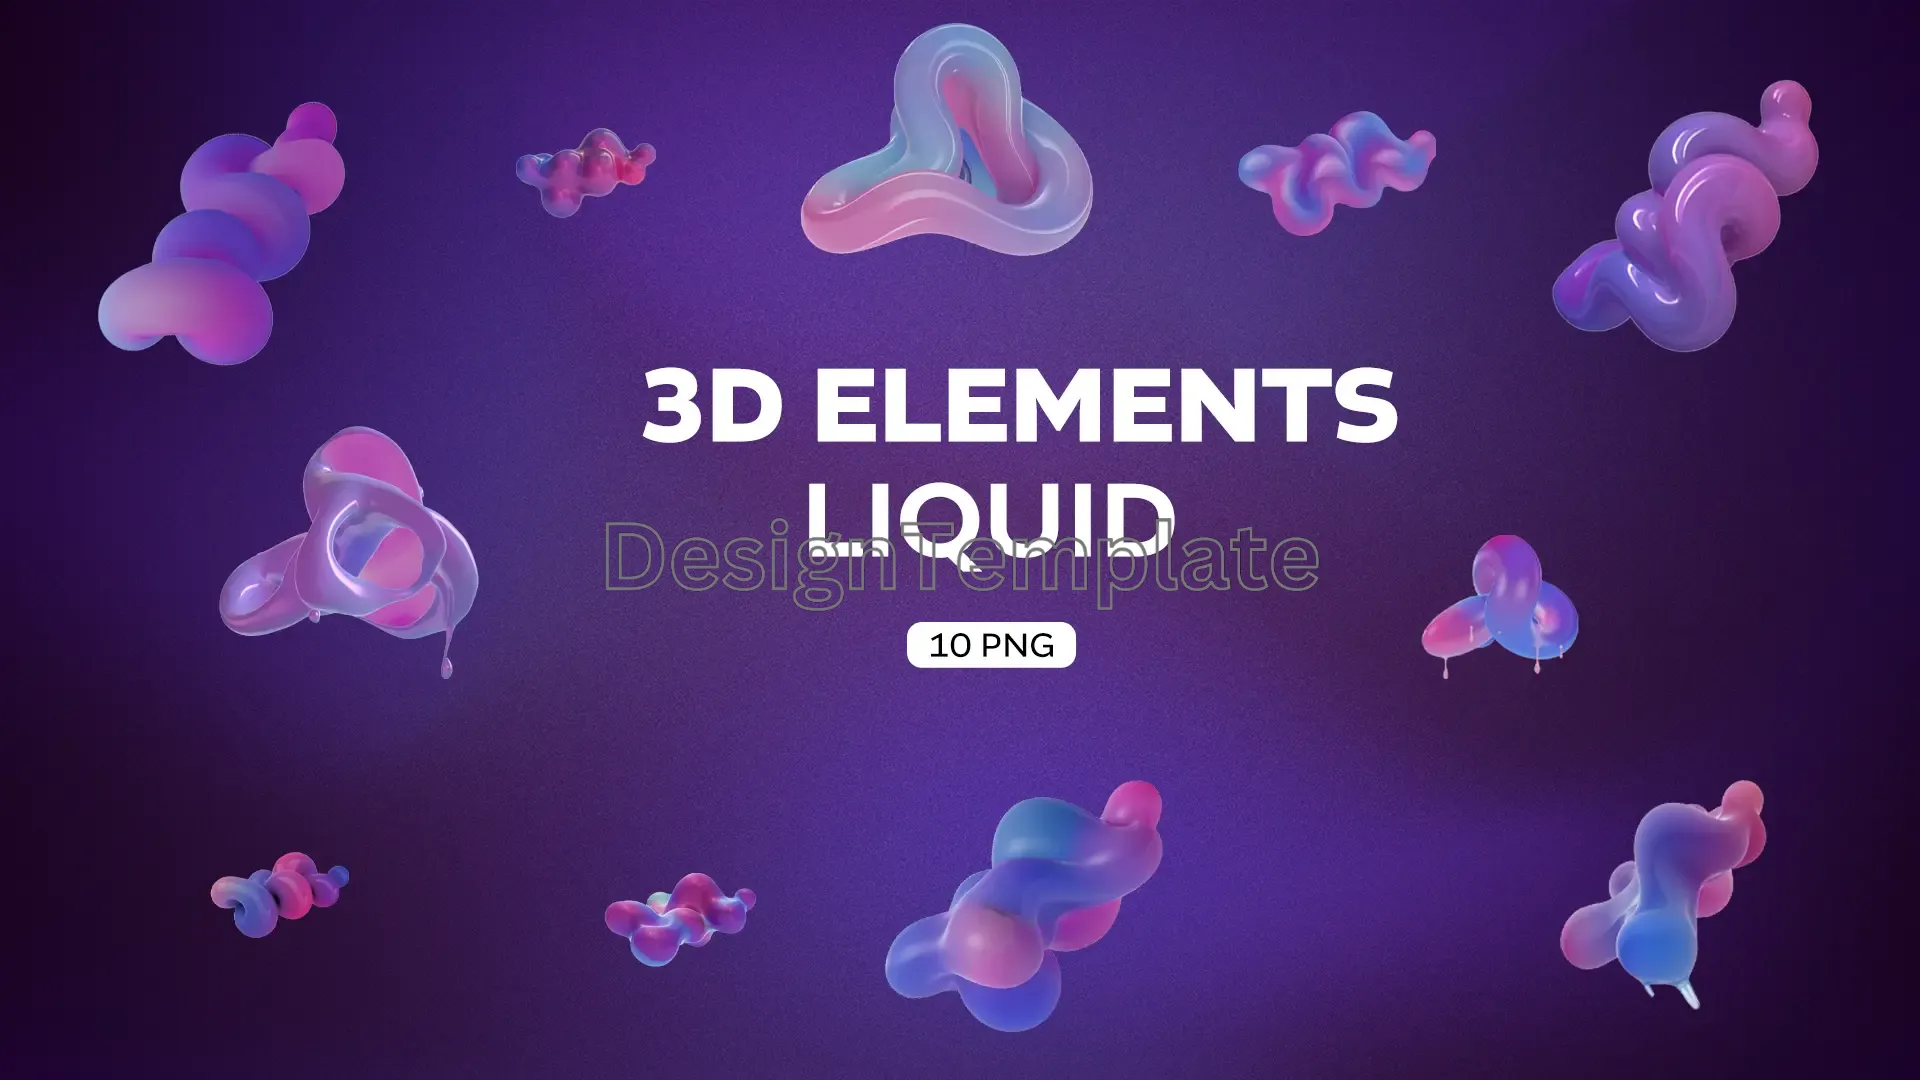 Fluid Forms Liquid 3D Elements Collection image